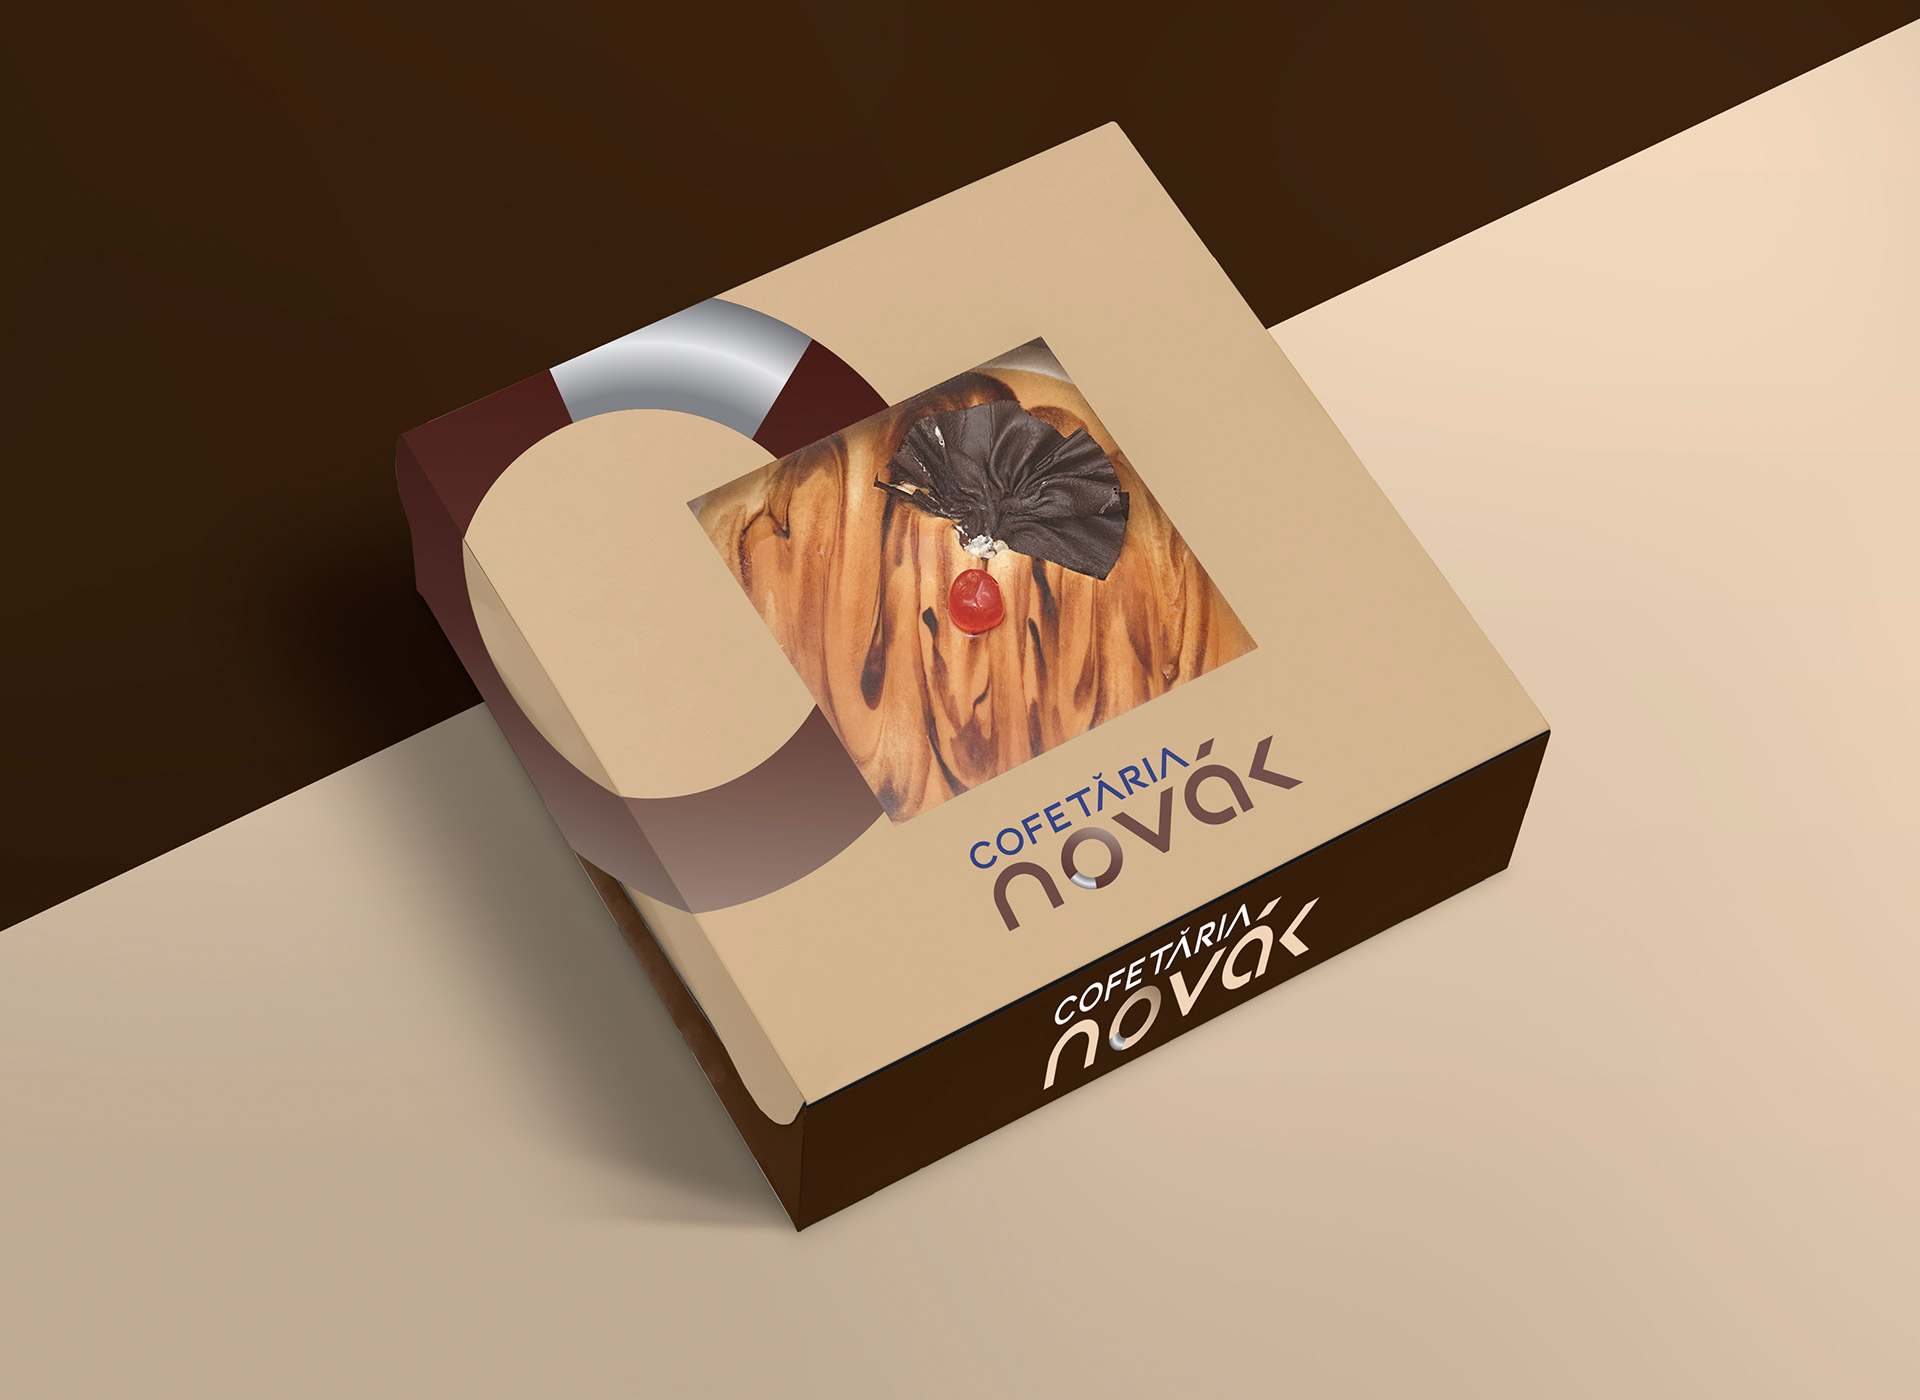 novak paper bag branding